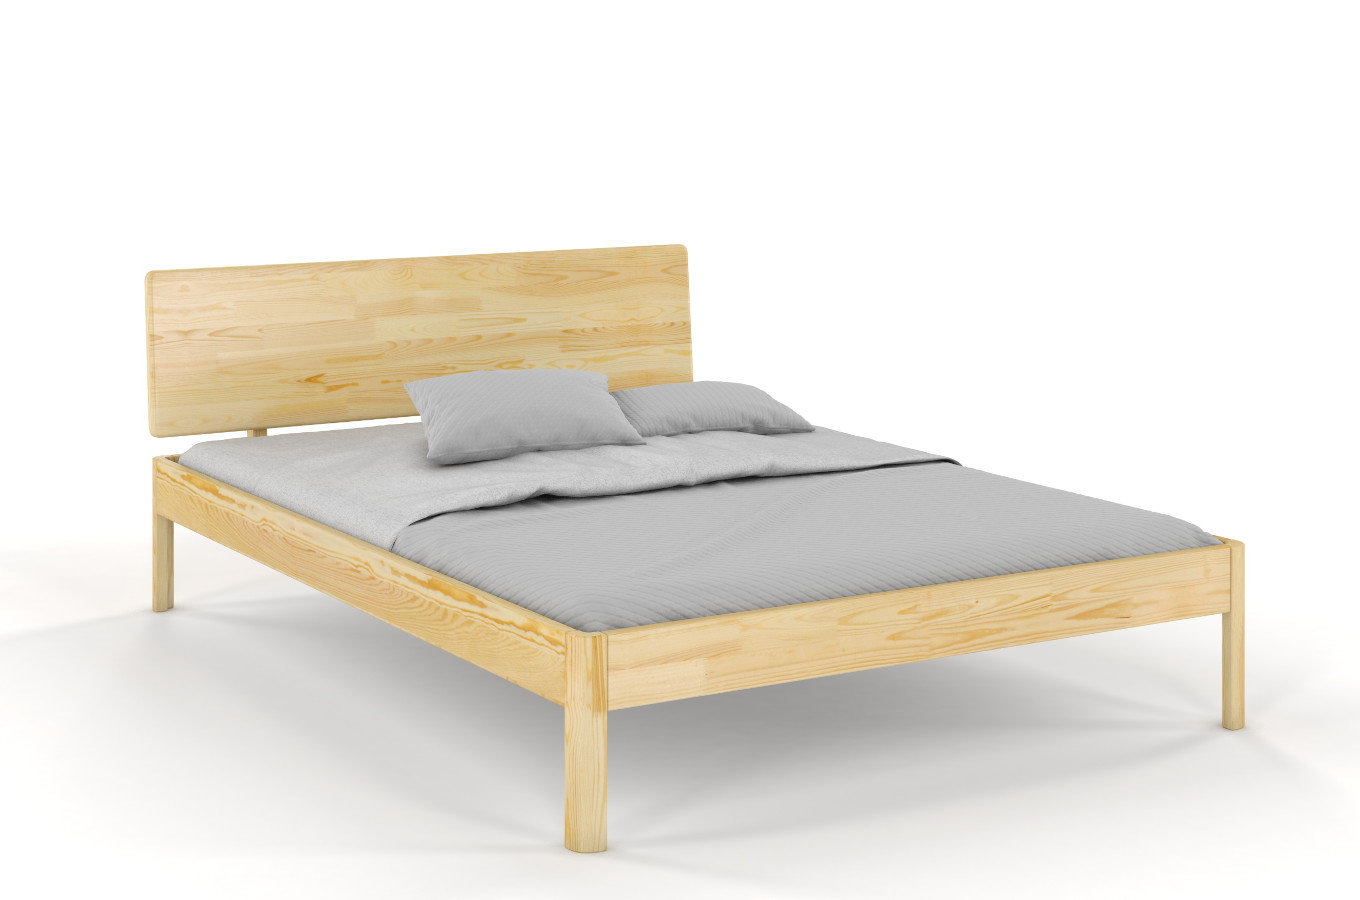  Łóżko drewniane sosnowe Visby AMMER / 180x200 cm, kolor naturalny